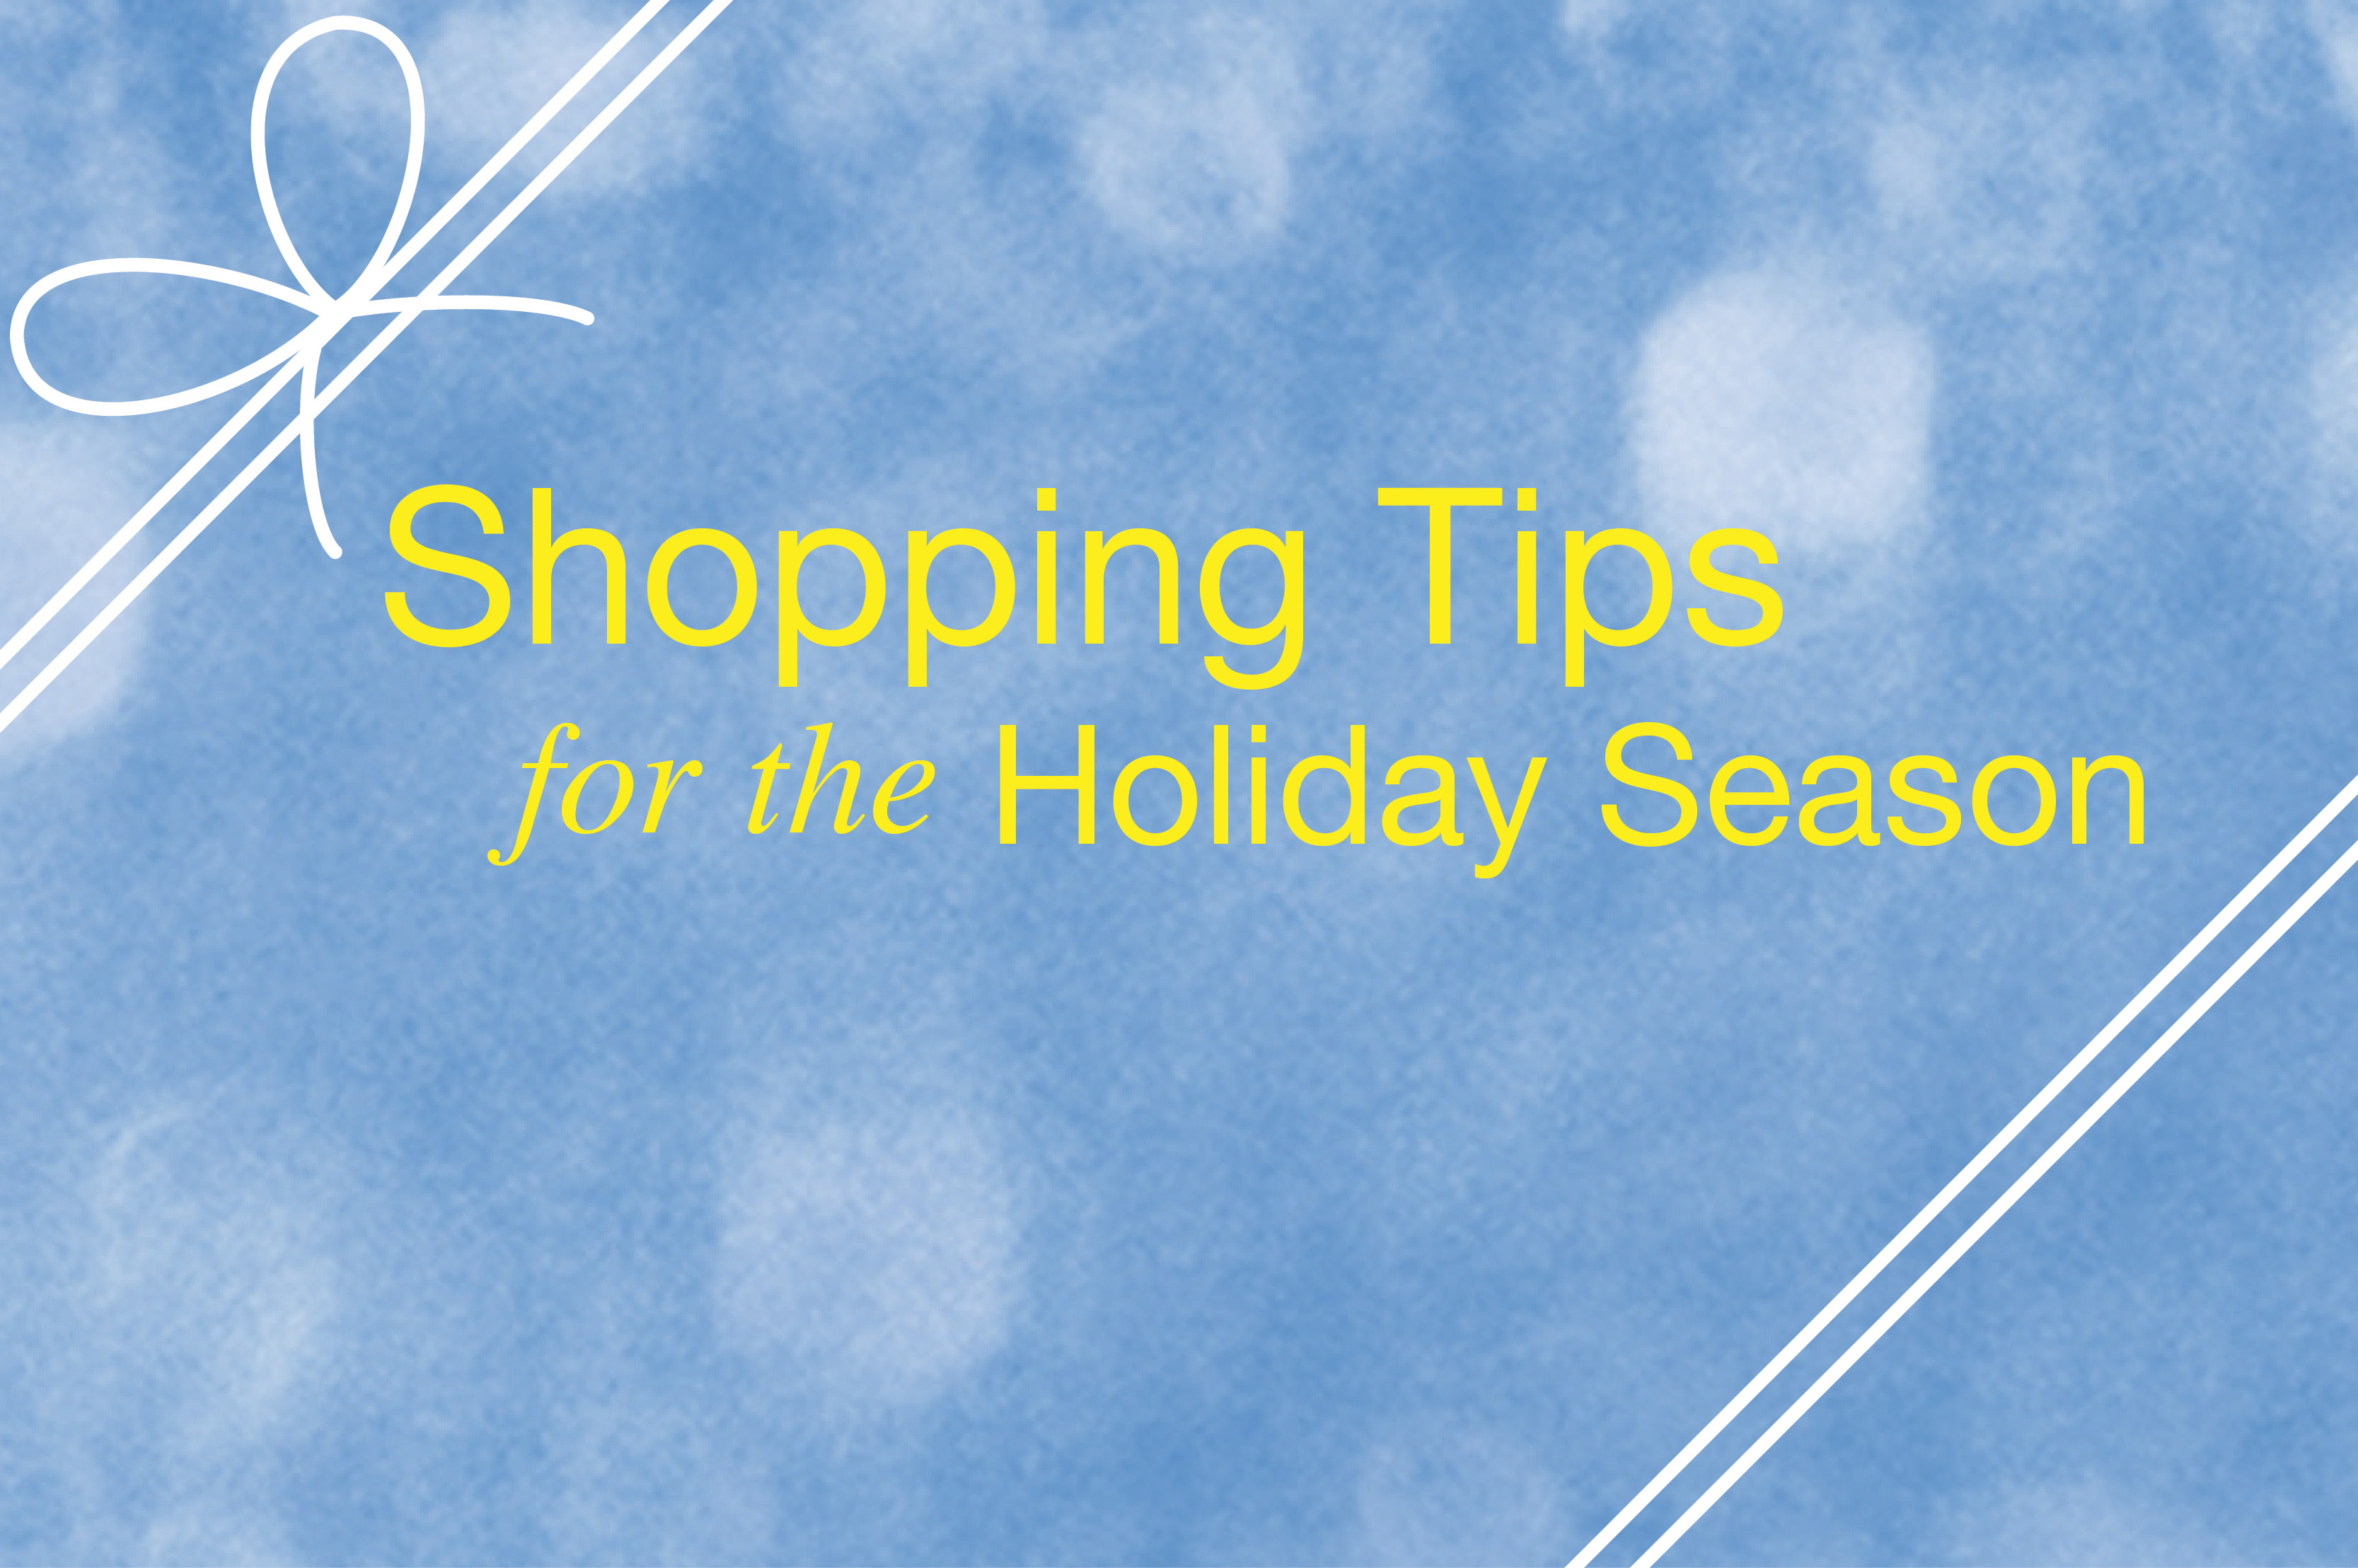 Holiday shopping tips.
                                           